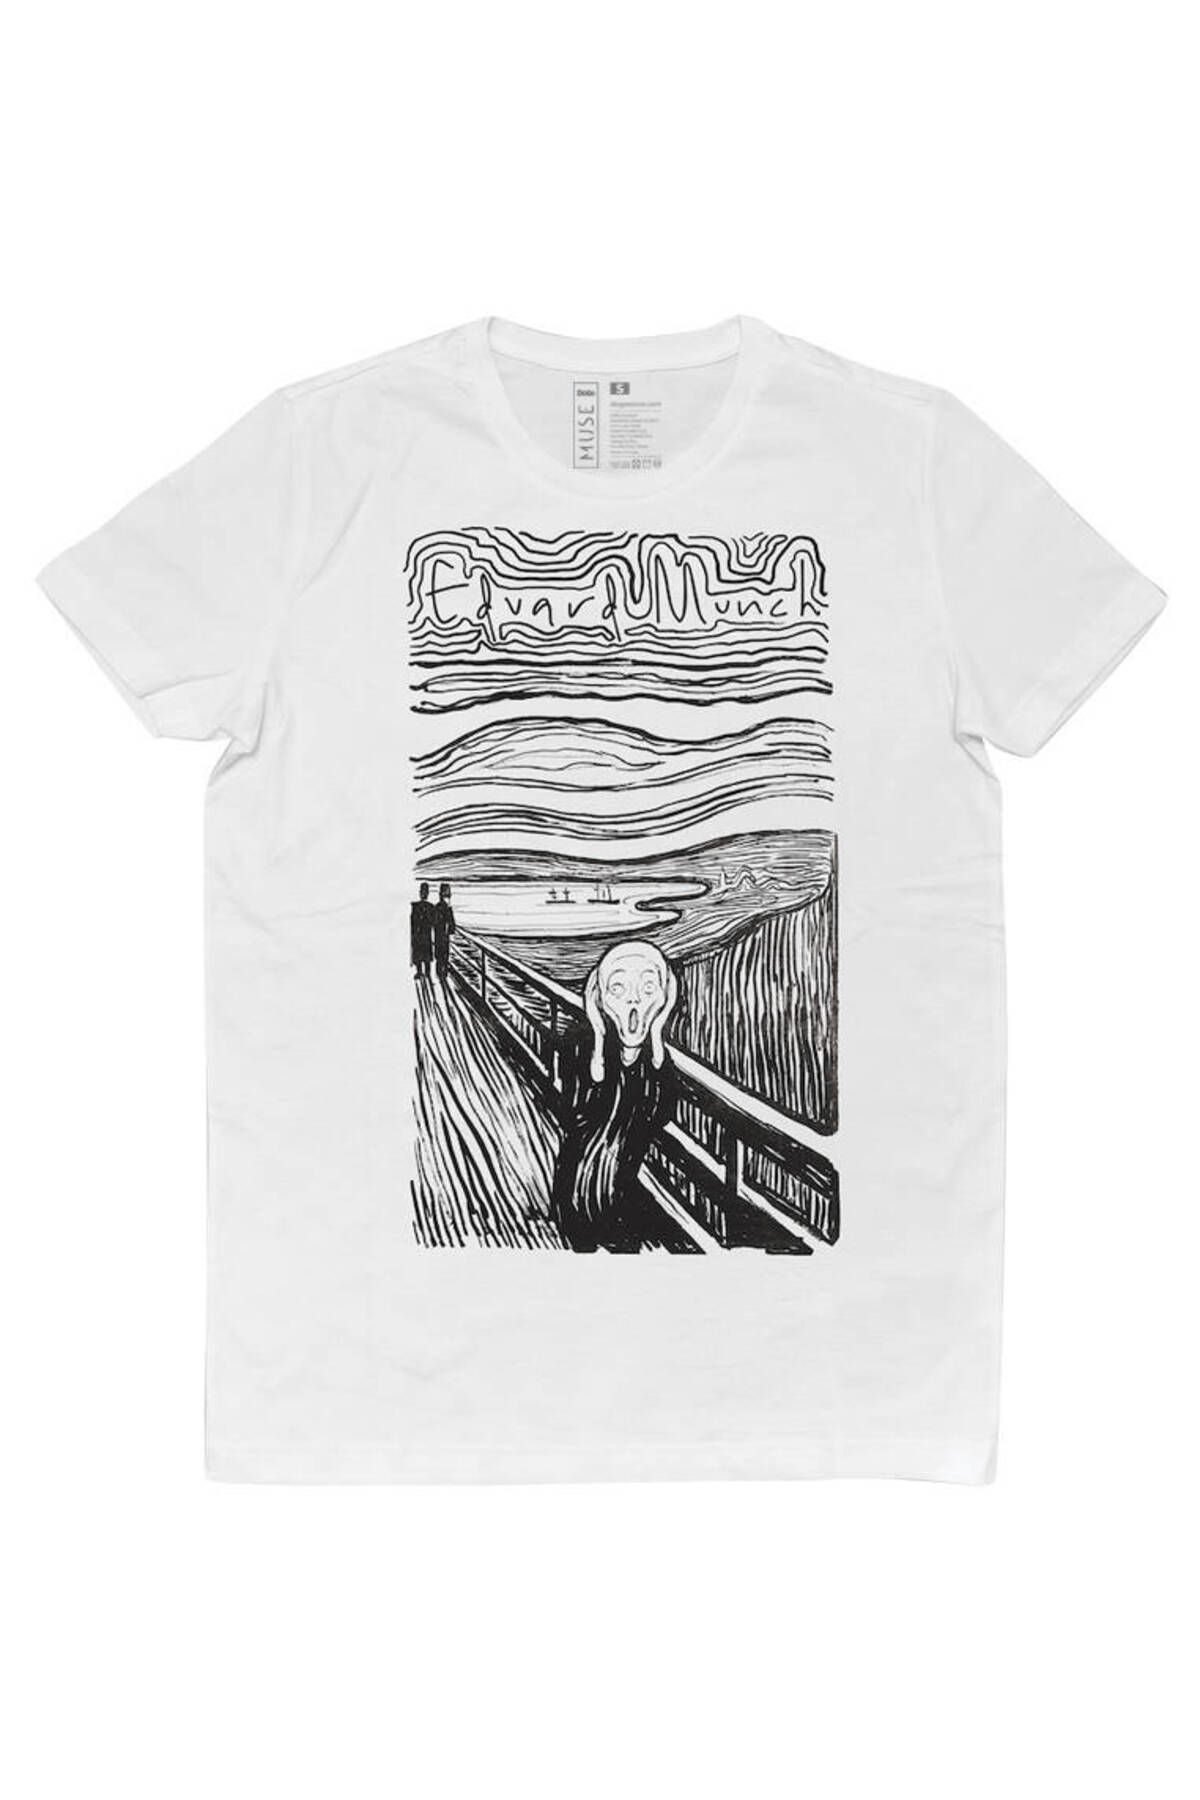 Dogo Unisex Vegan Beyaz T-shirt - Edvard Munch The Scream Muse Tasarım